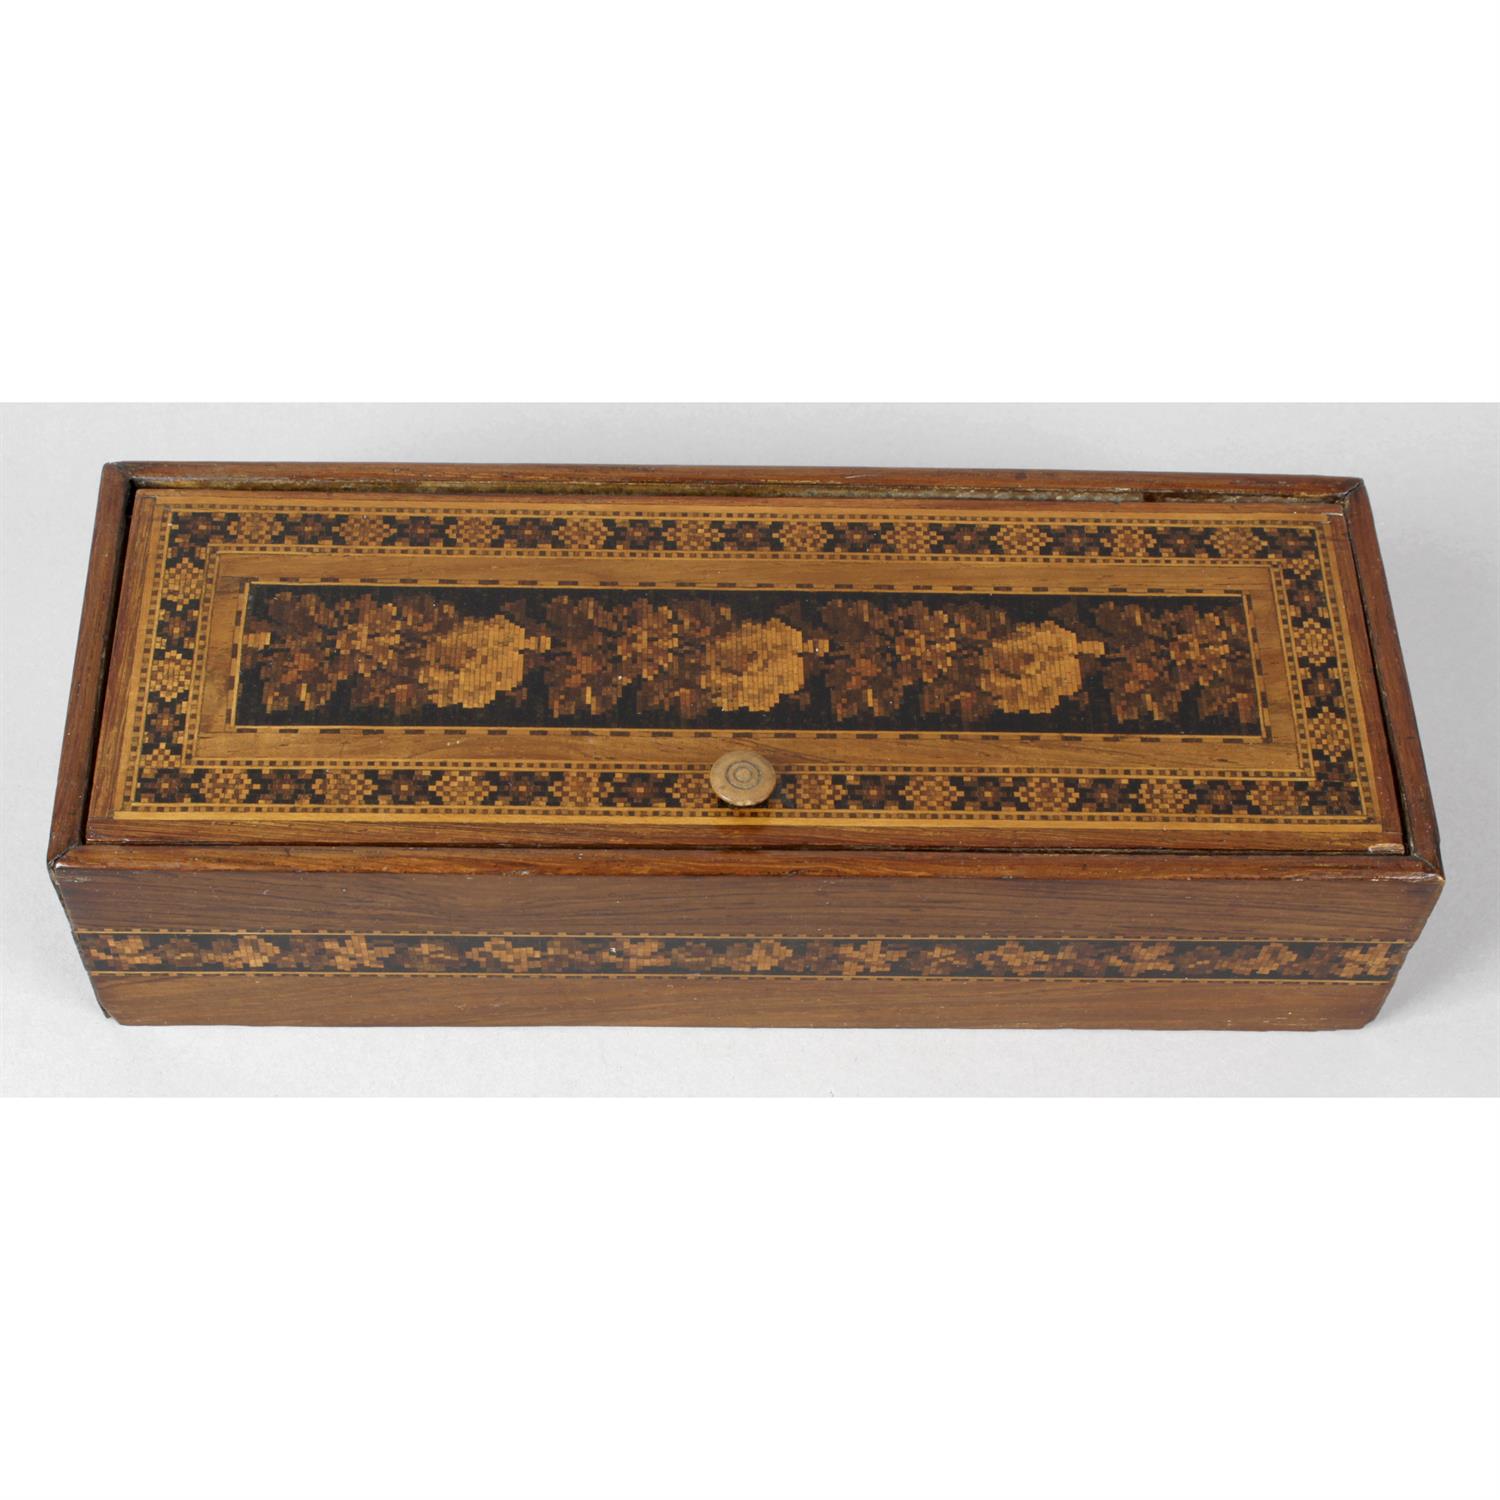 A 19th Century Tunbridge ware ladies glove box.